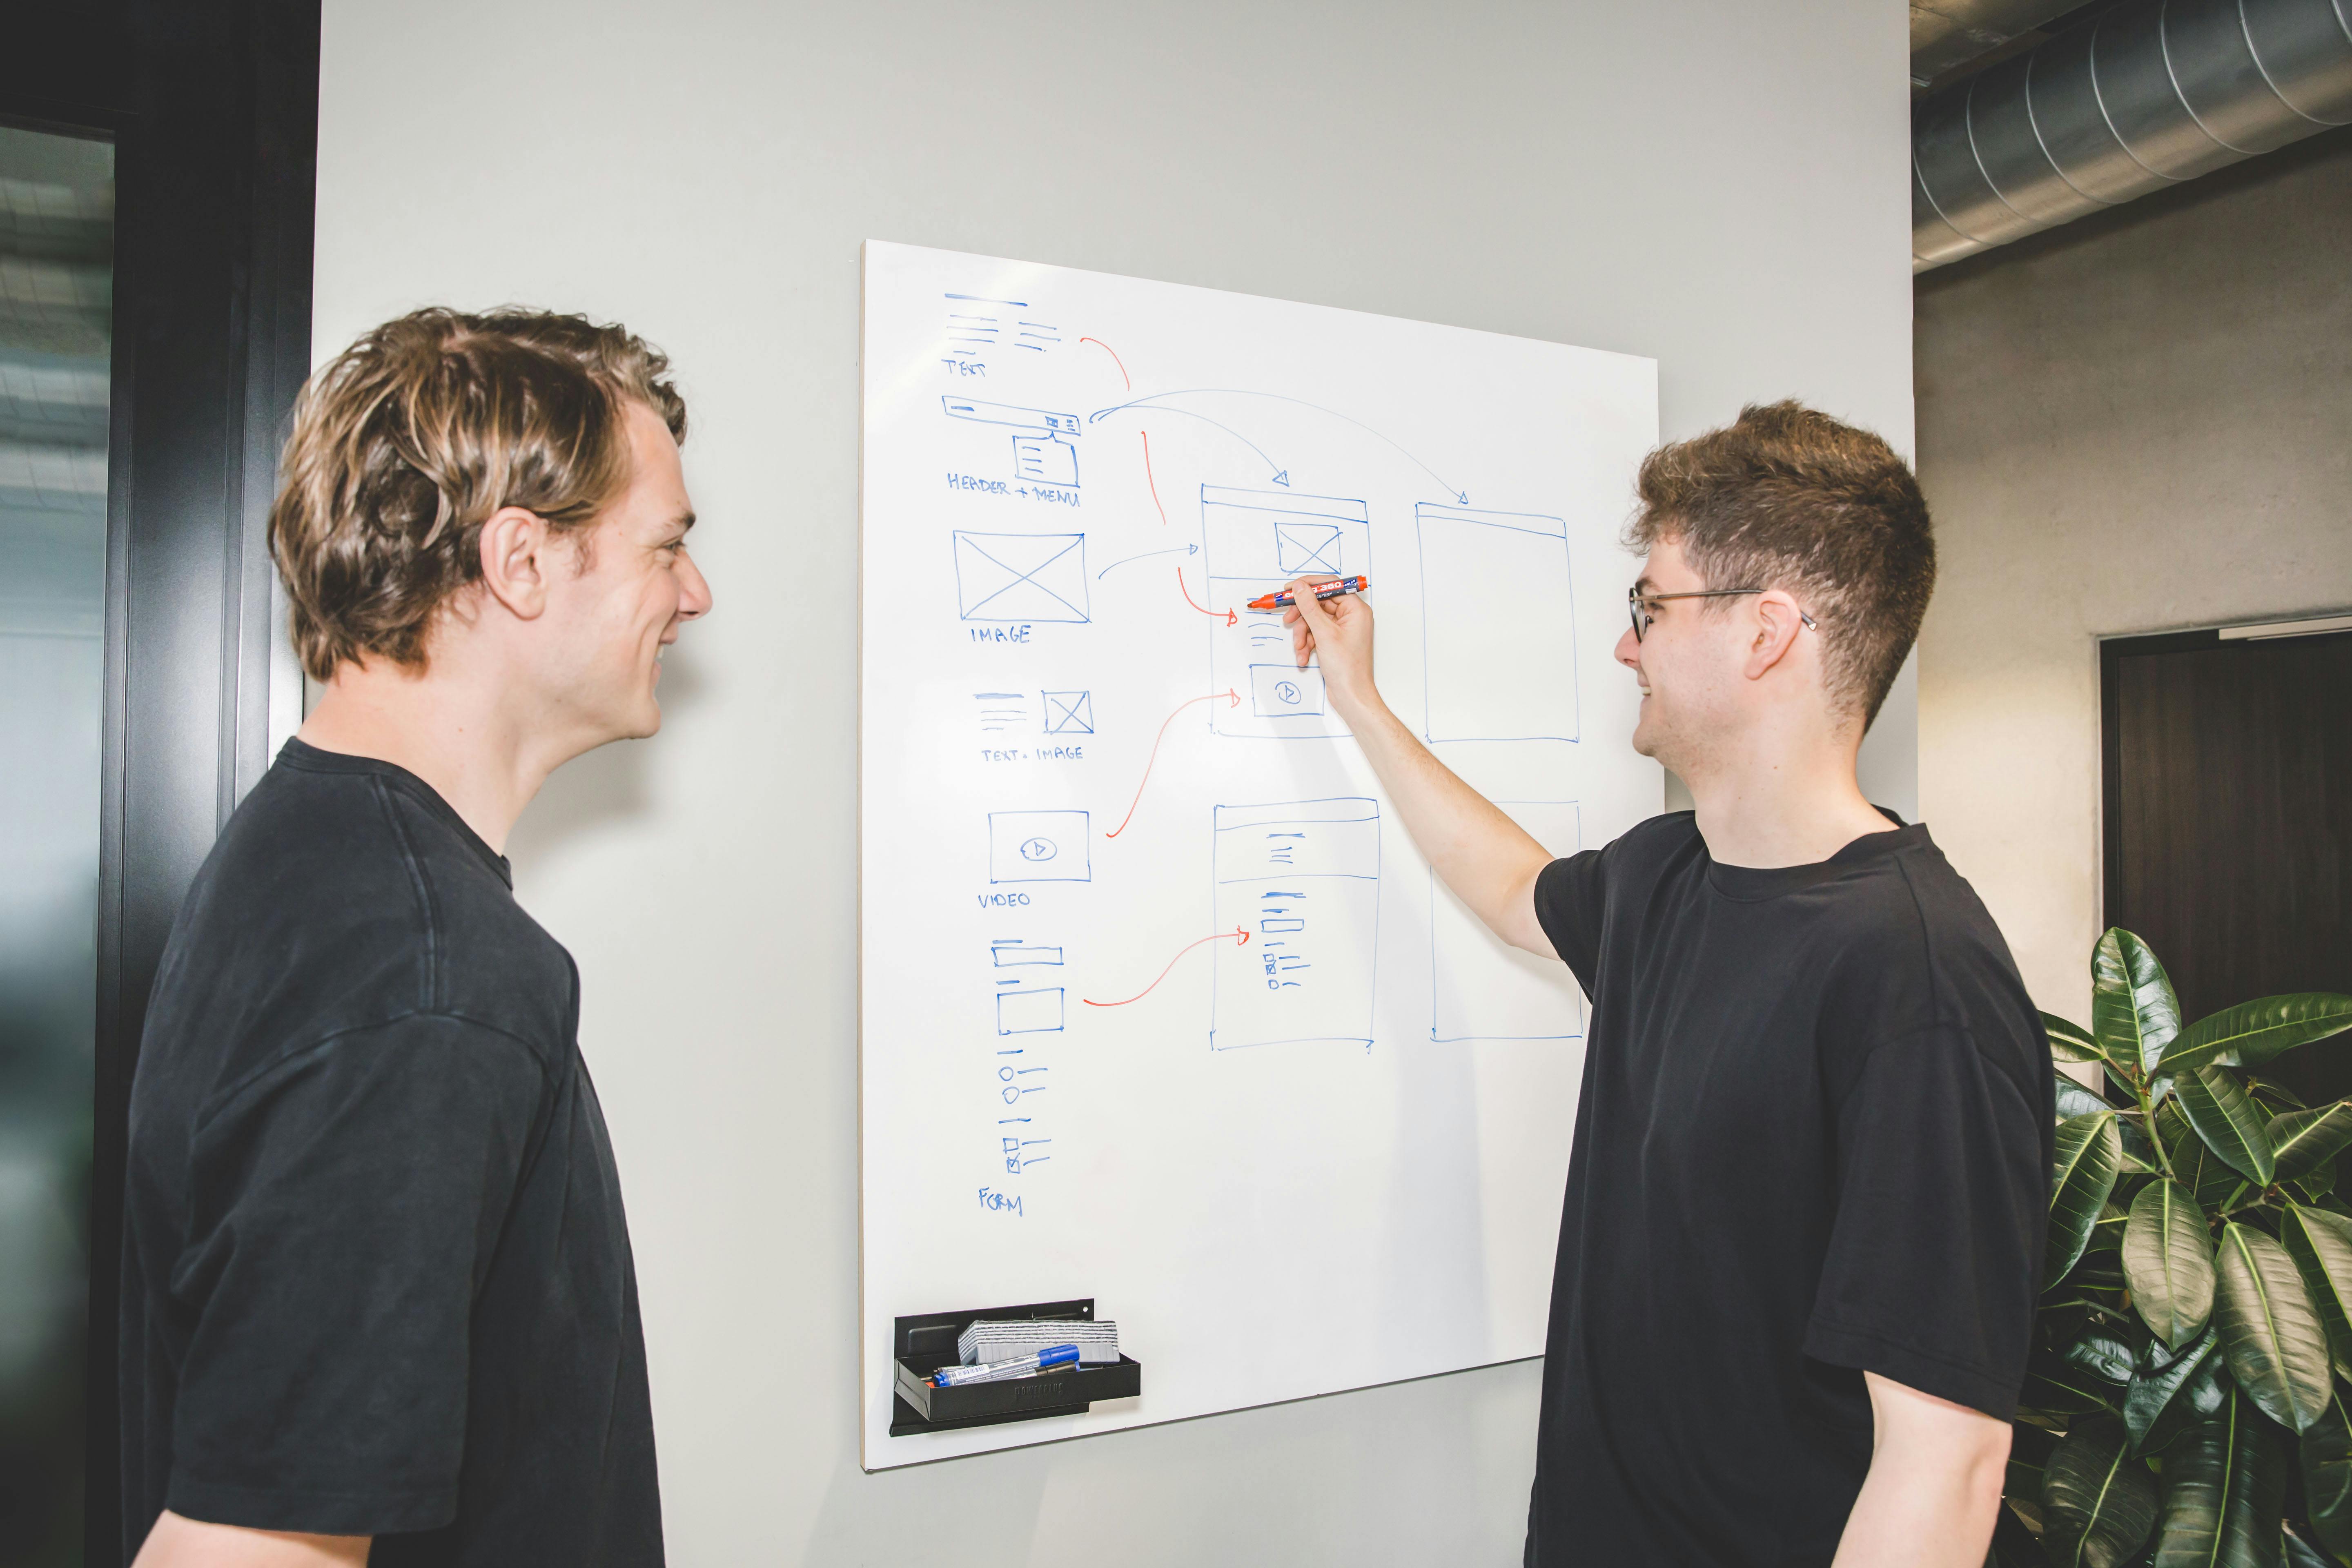 Developers from De Voorhoede sketching design system components